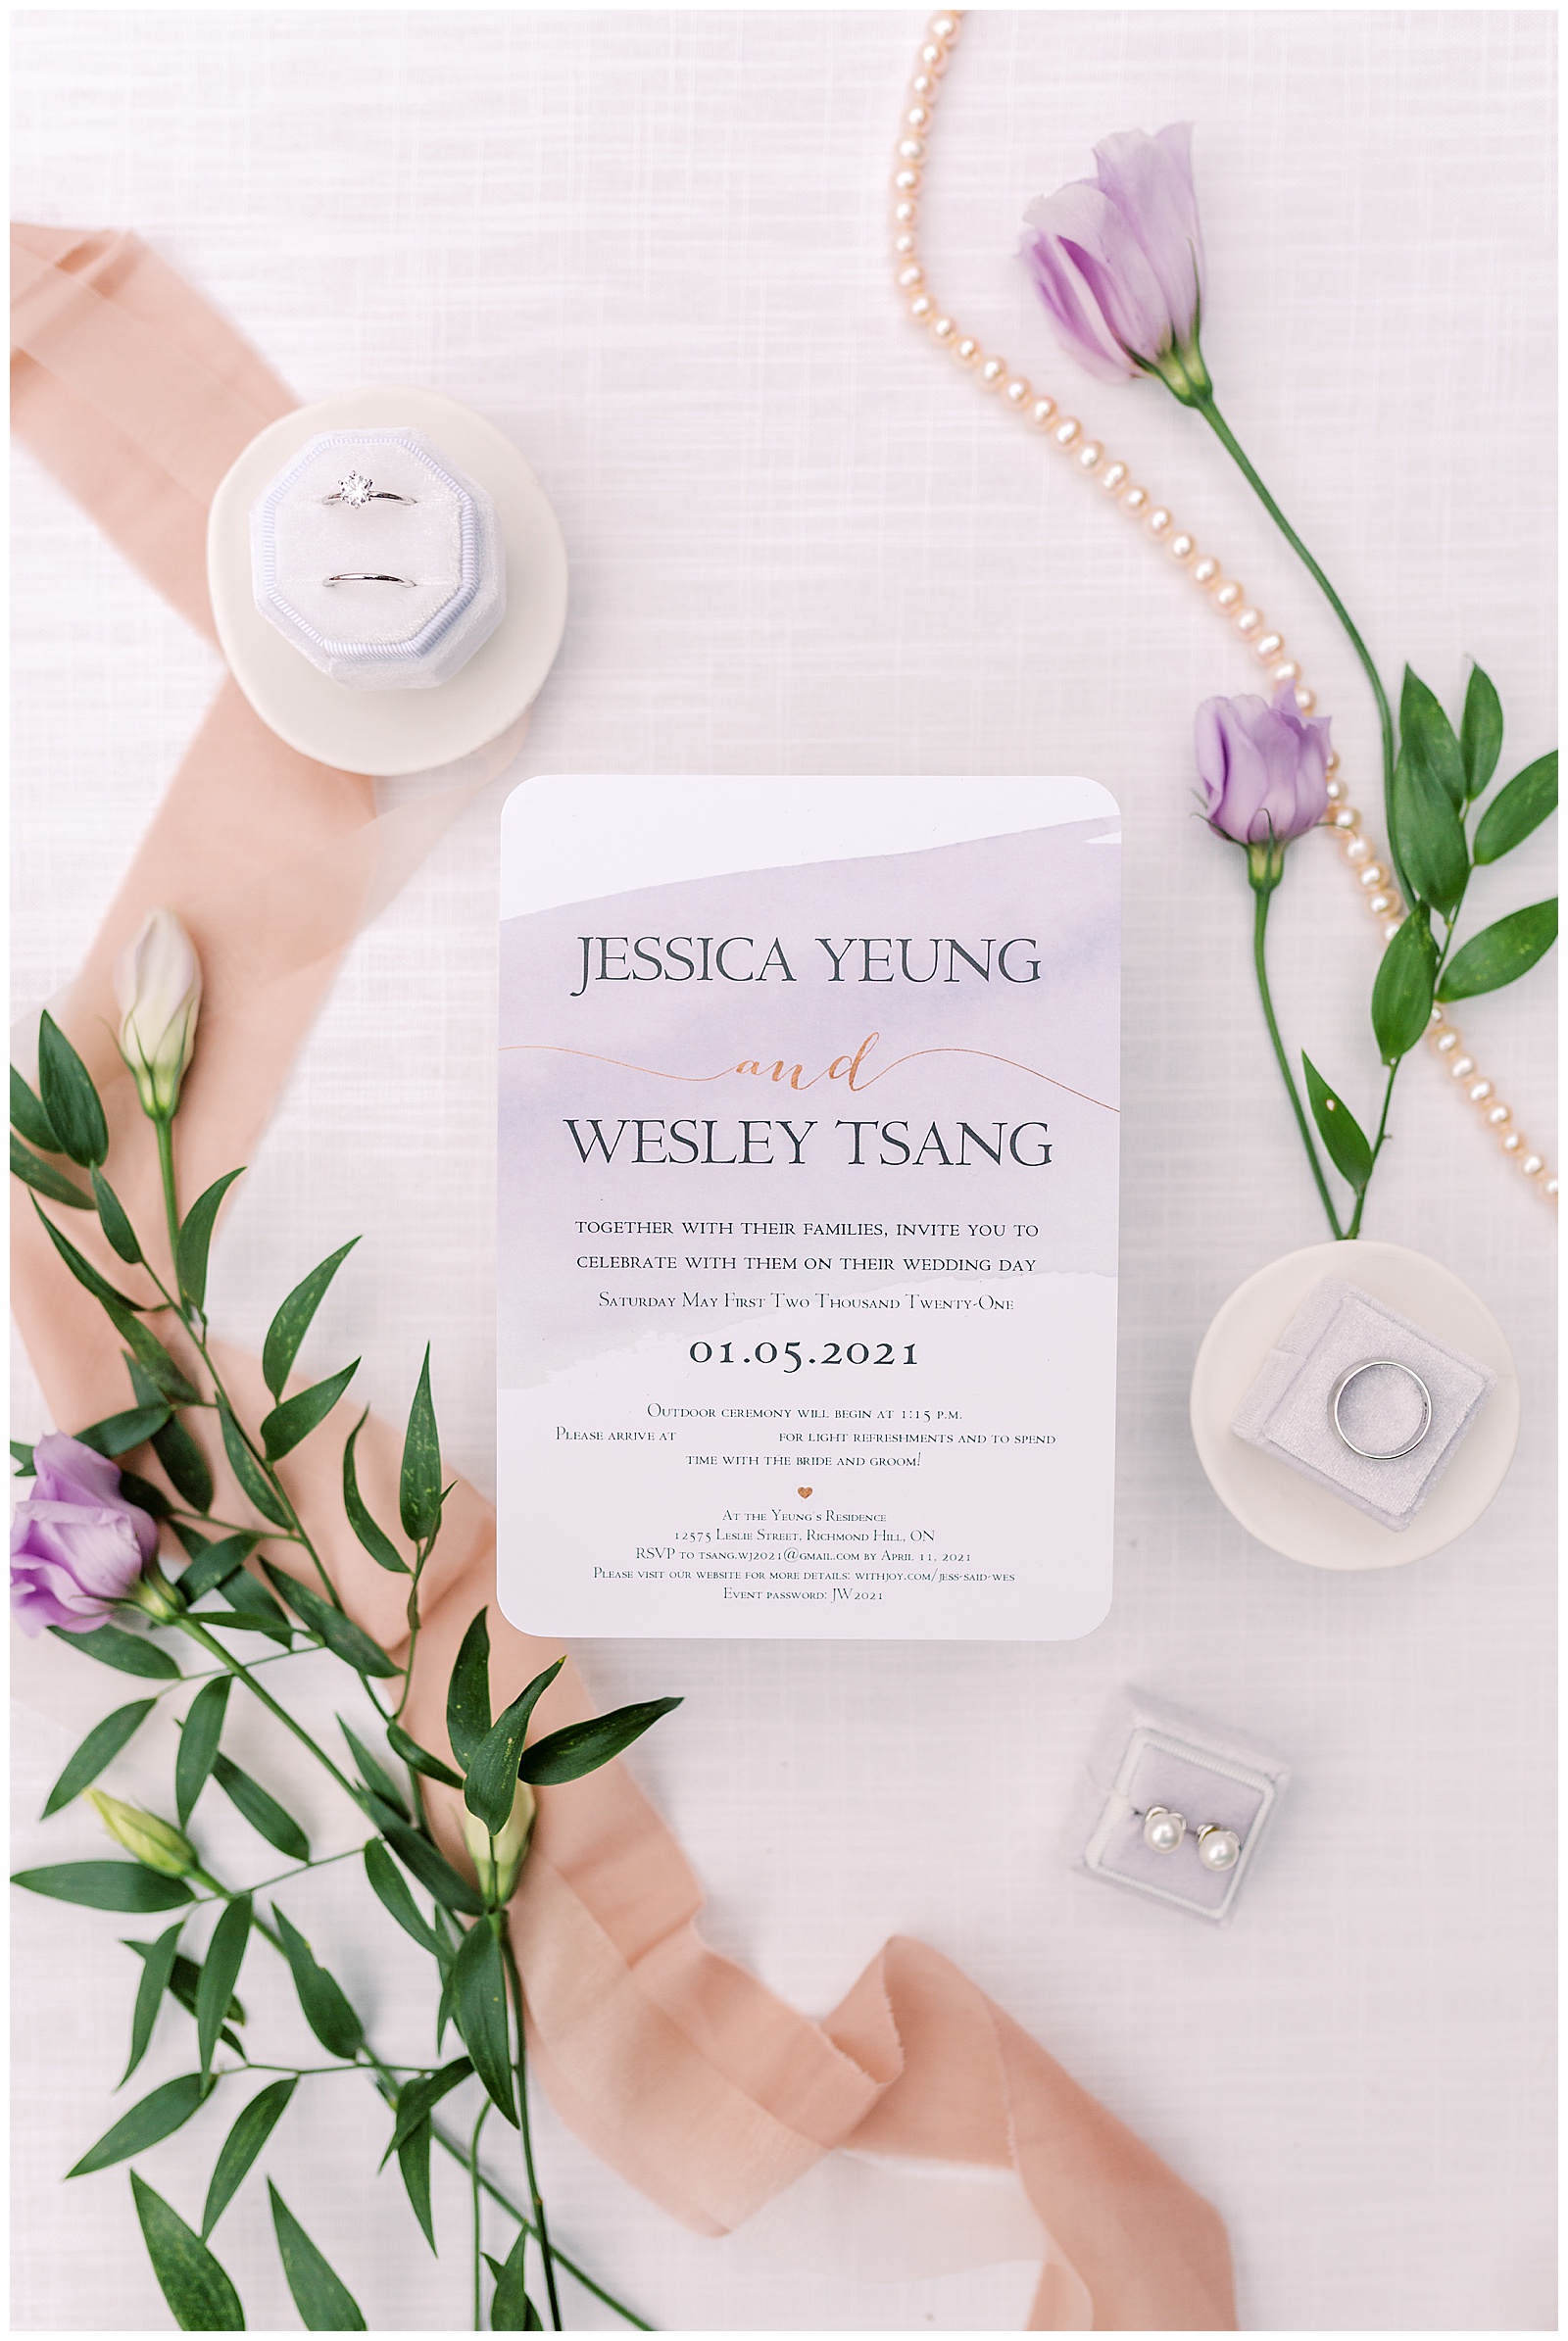 Jessica Yeung and Wesley Tsang Wedding Invitation